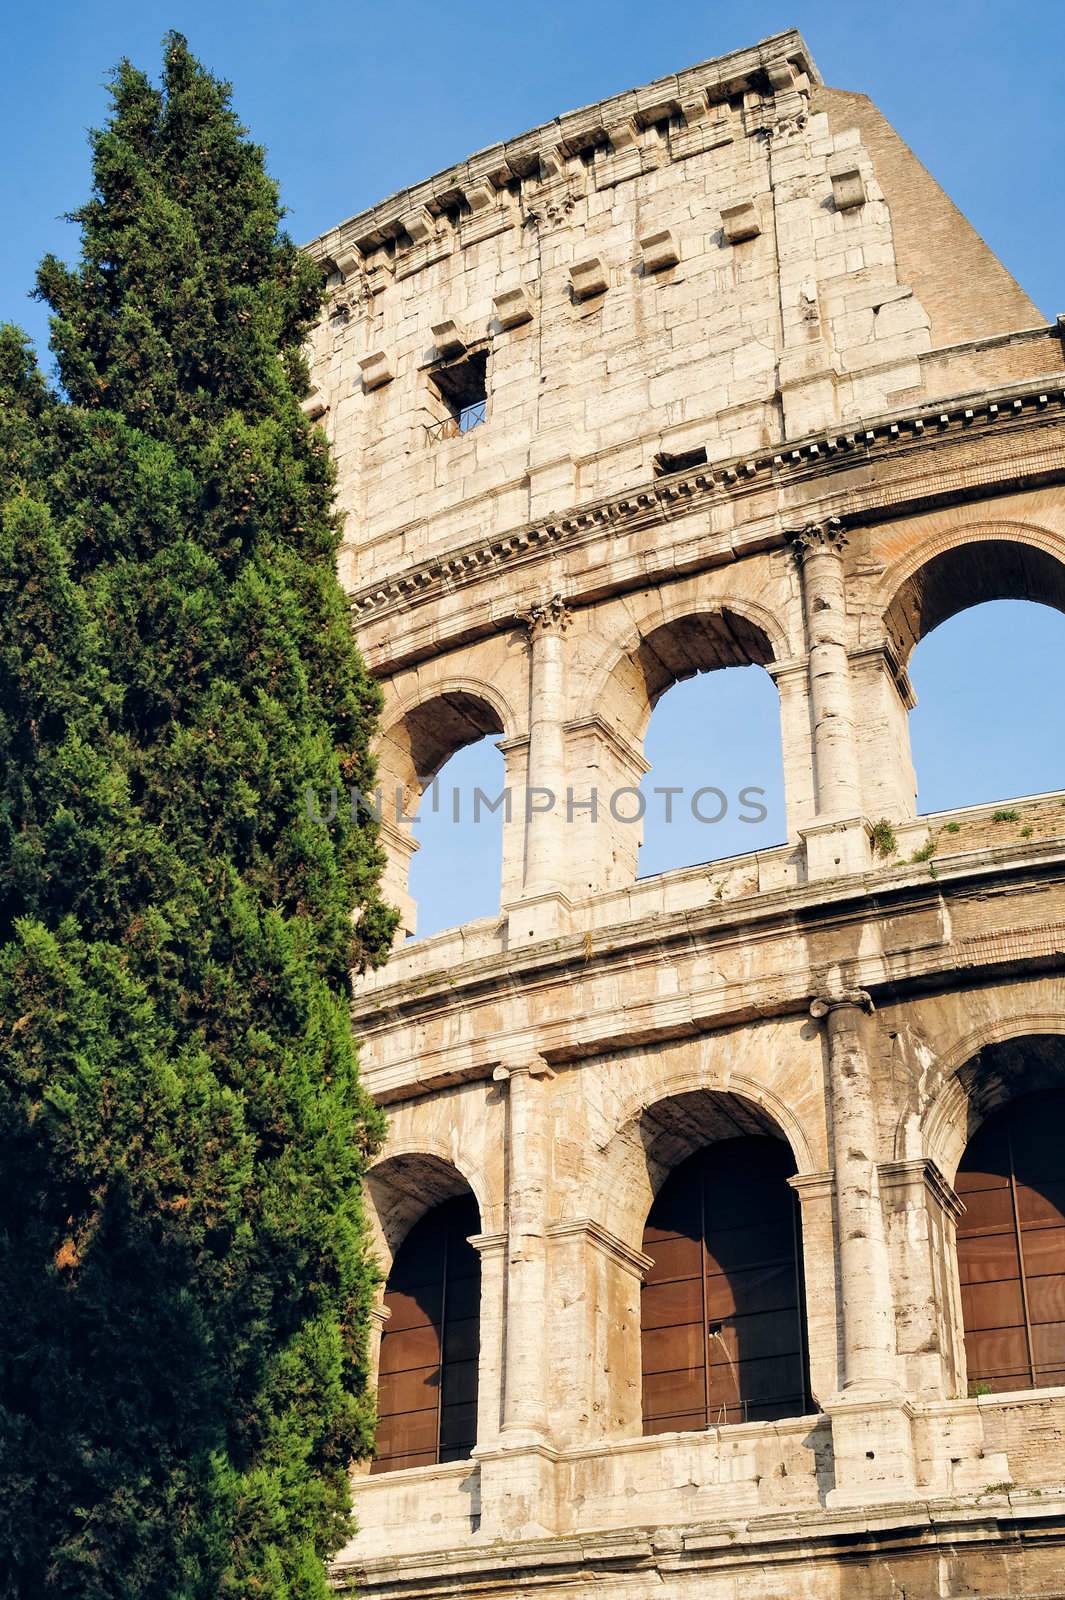 Colosseum by styf22